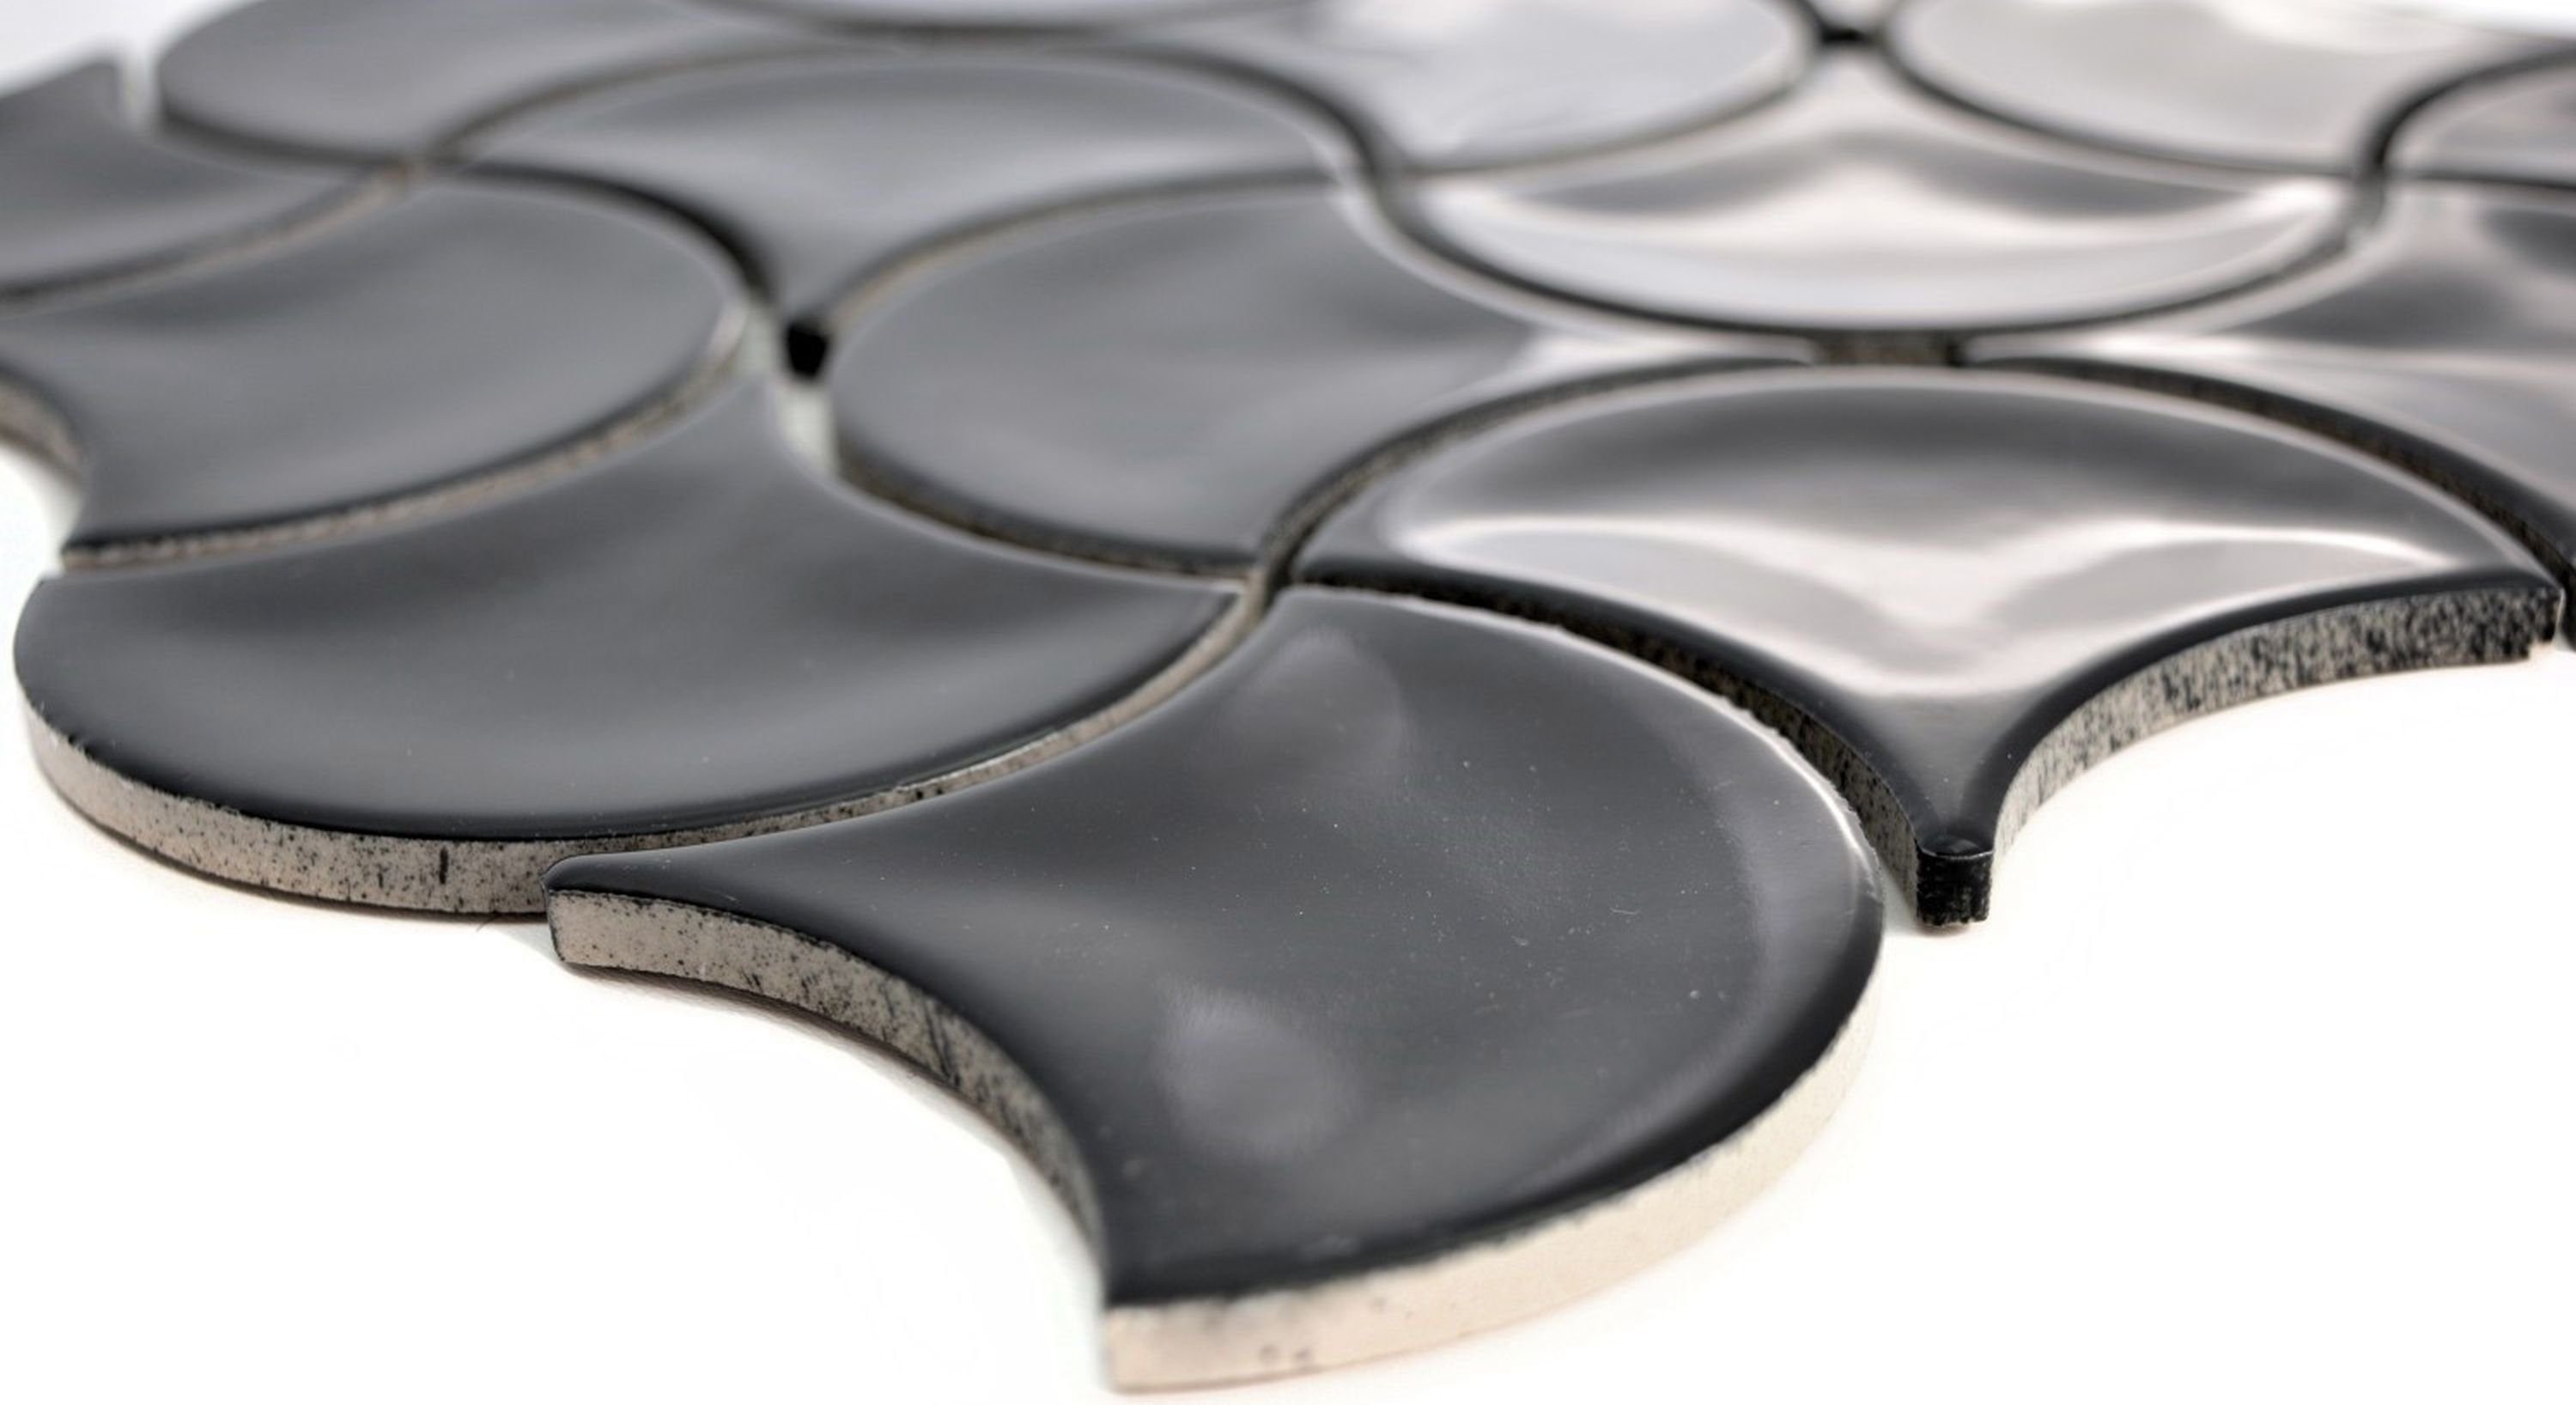 Mosani Mosaikfliesen Fächer Keramikmosaik Mosaikfliesen glänzend schwarz Matten 10 